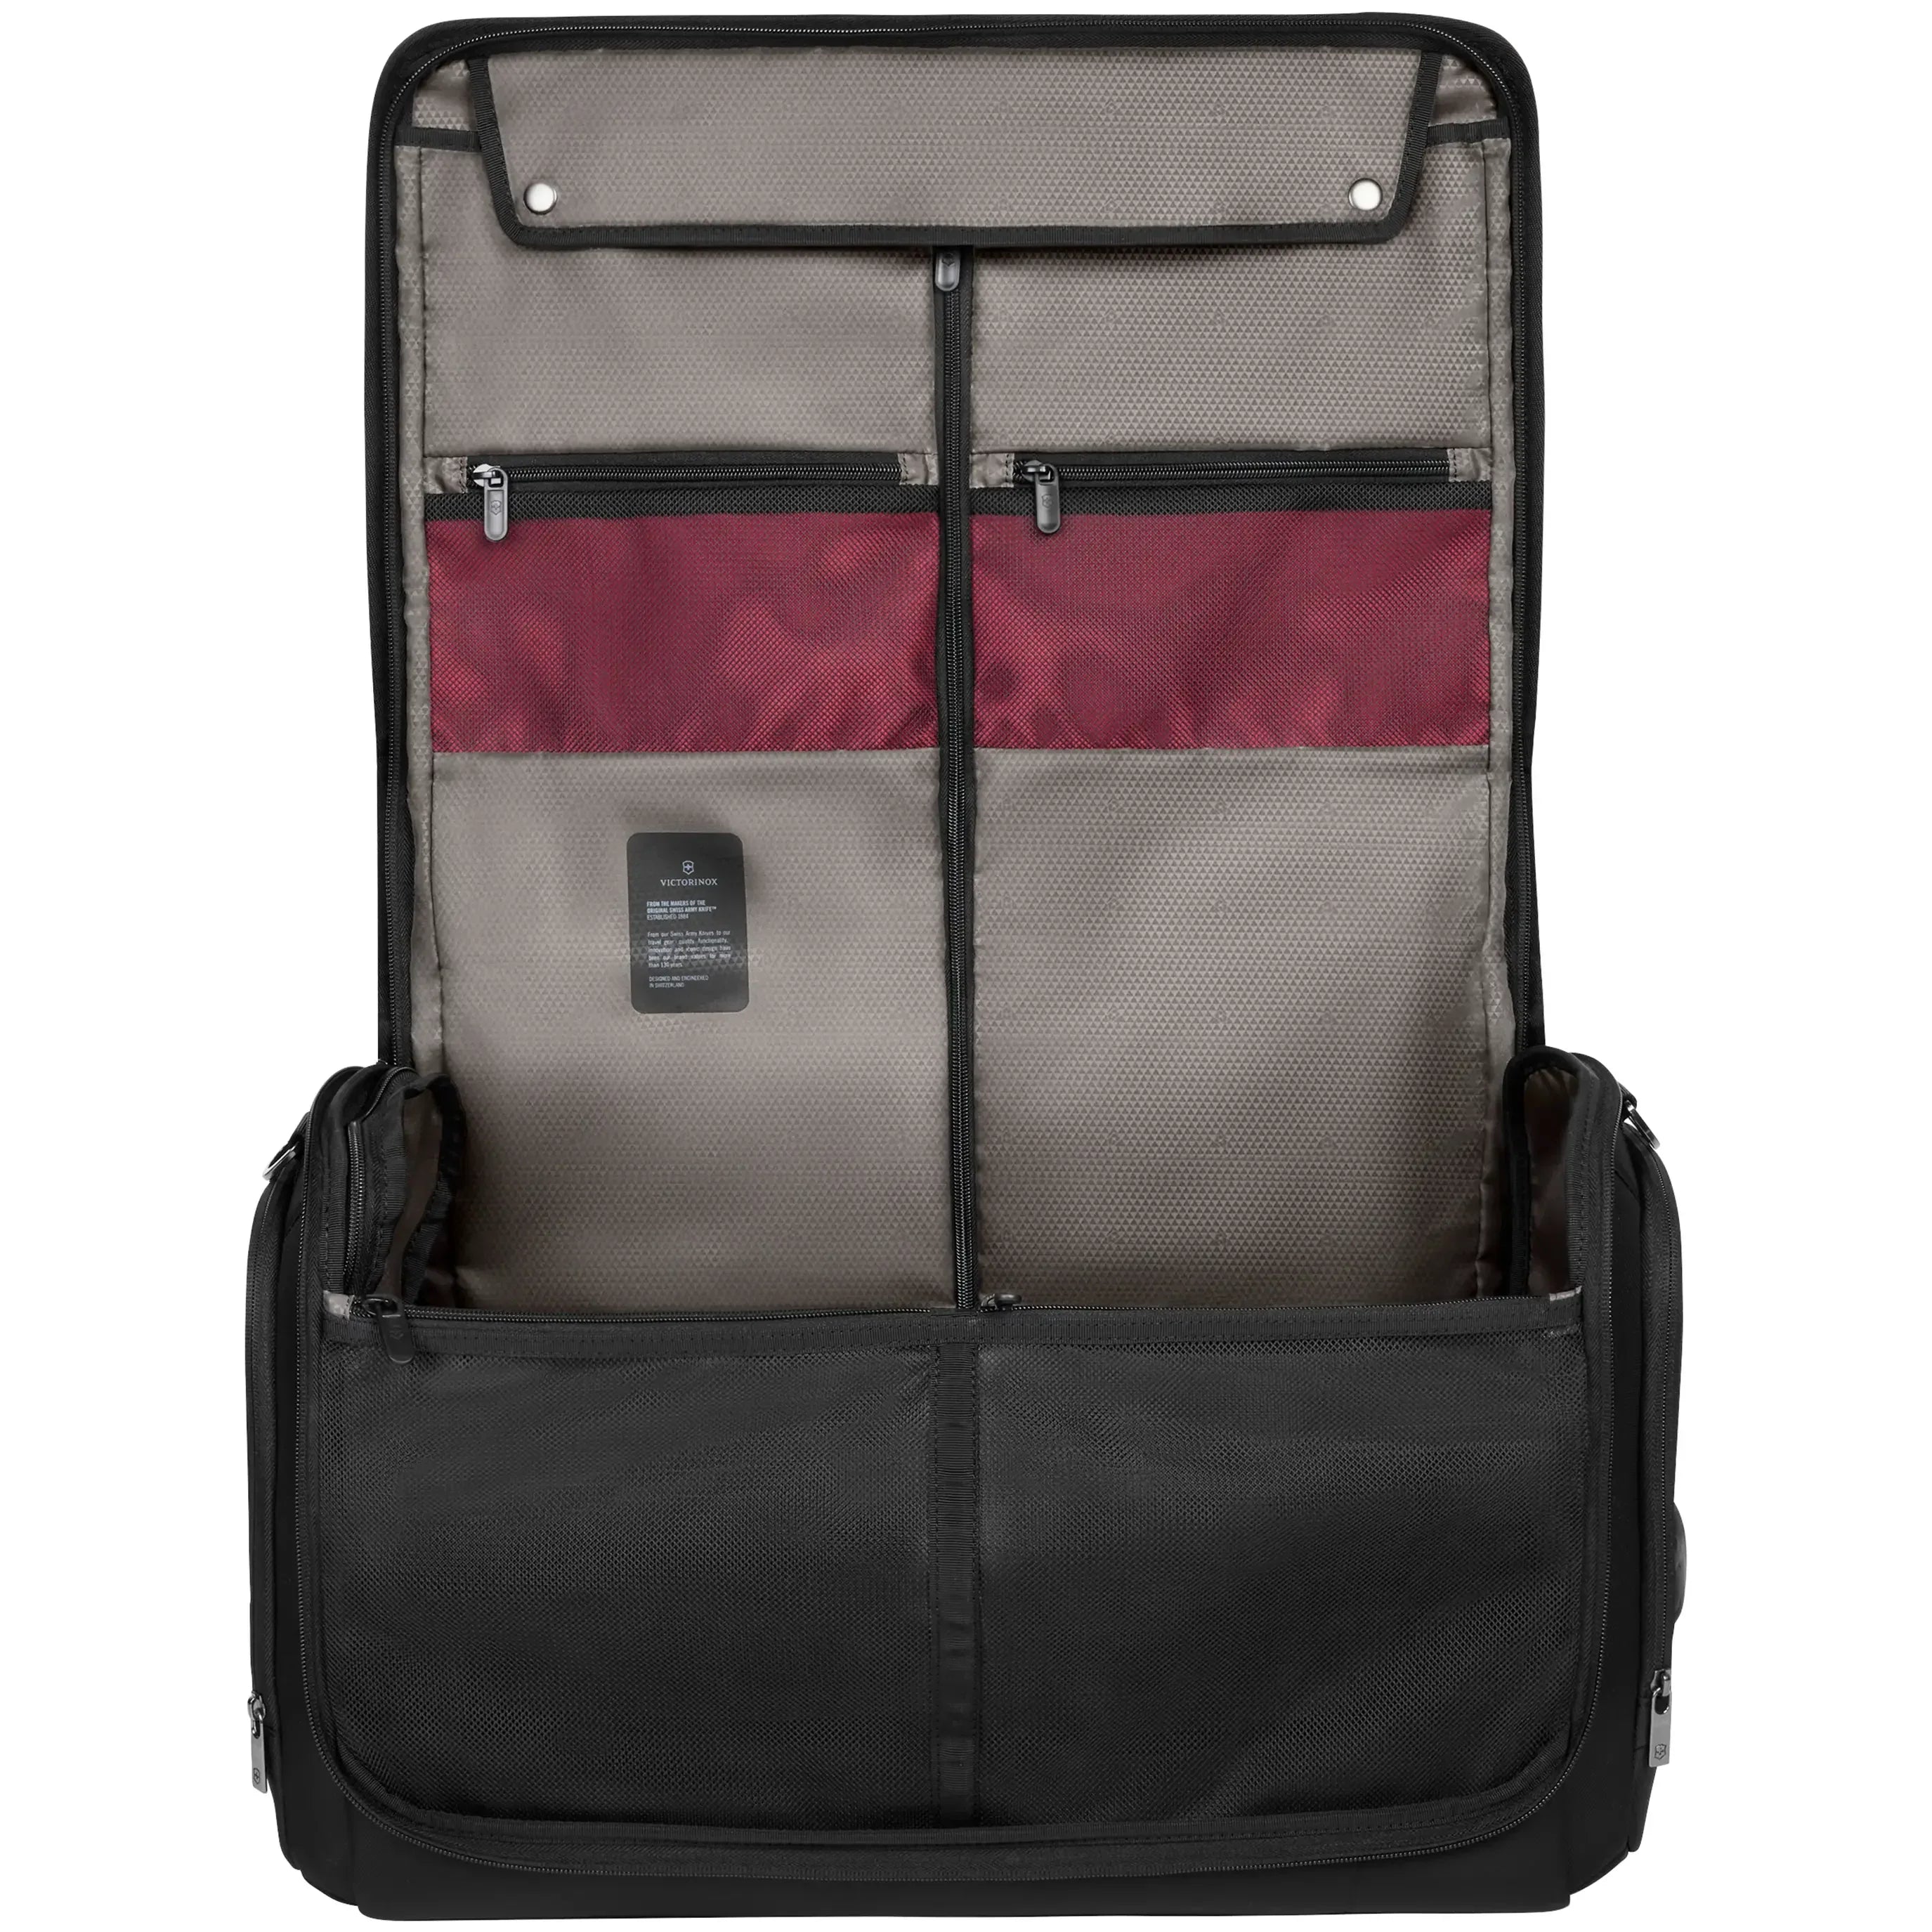 Victorinox Crosslight Garment Bag 56 cm - Black